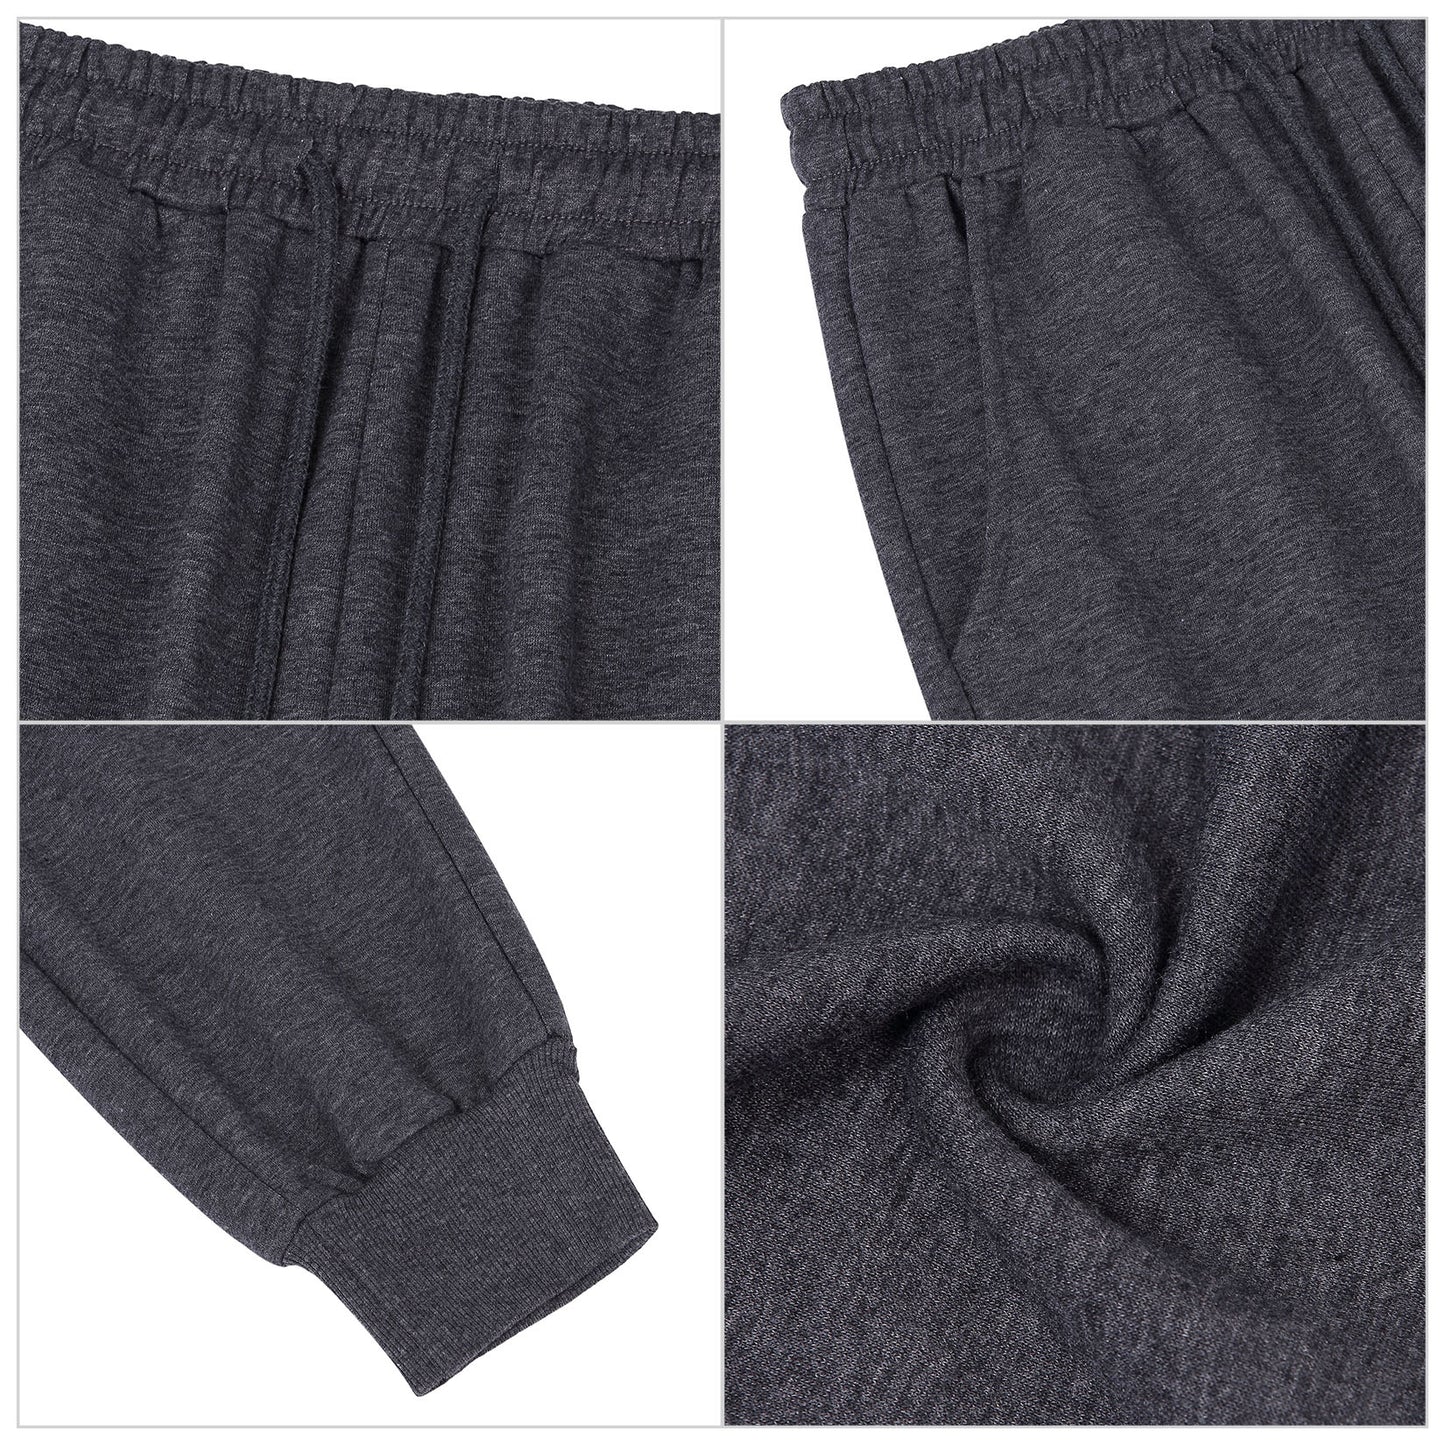 YESFASHION Women's Drawing Pockets Casual Sports Pants Dark Grey